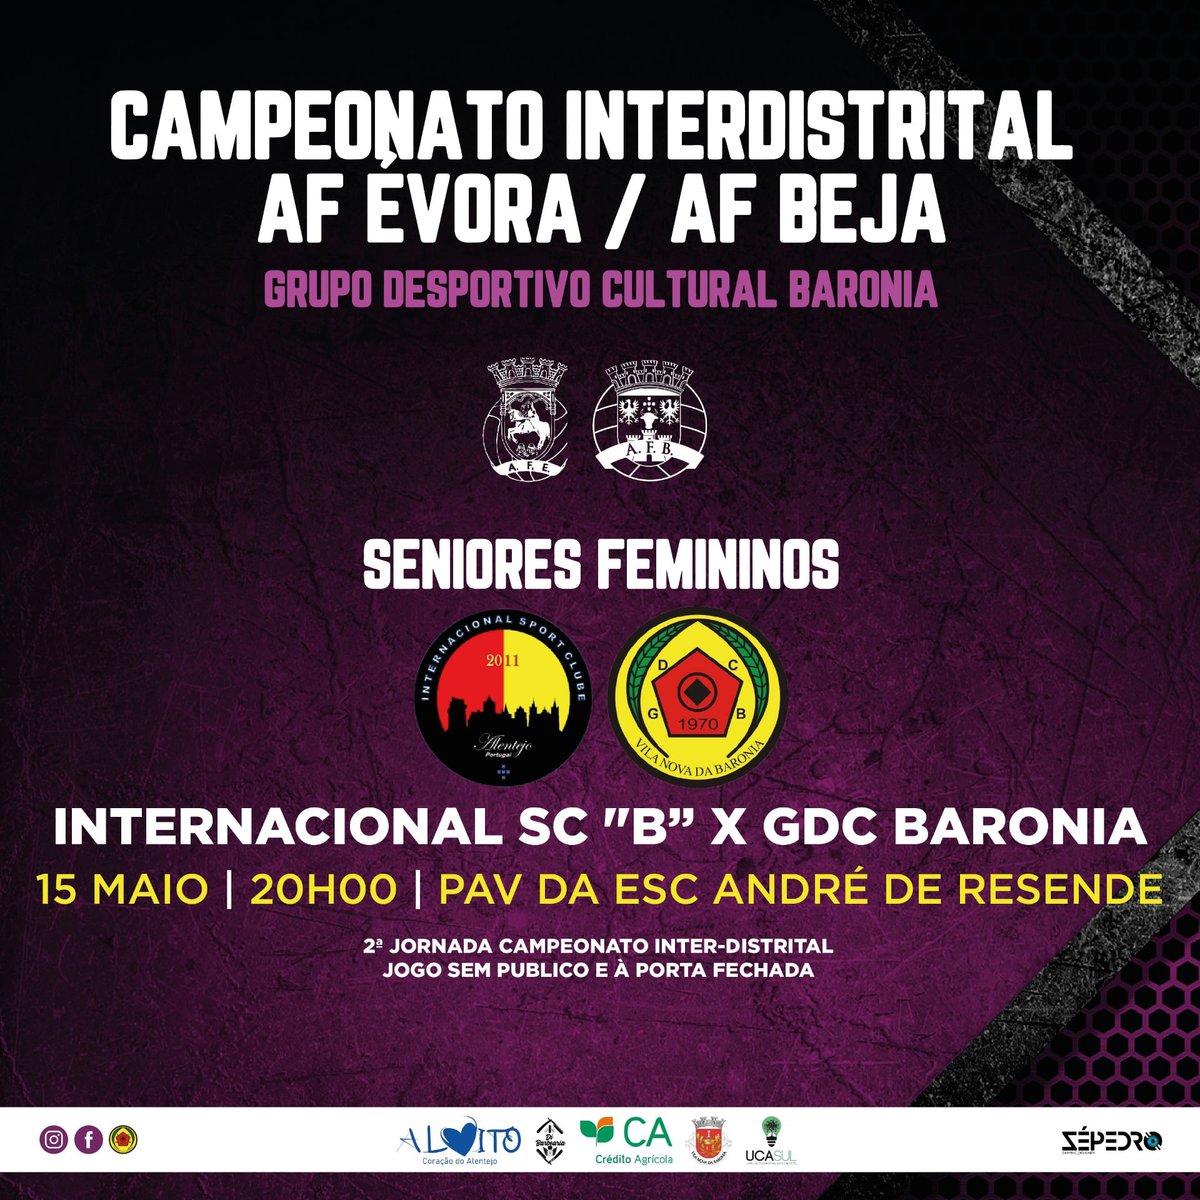 Jogo - Internacional "B" x GDC Baronia